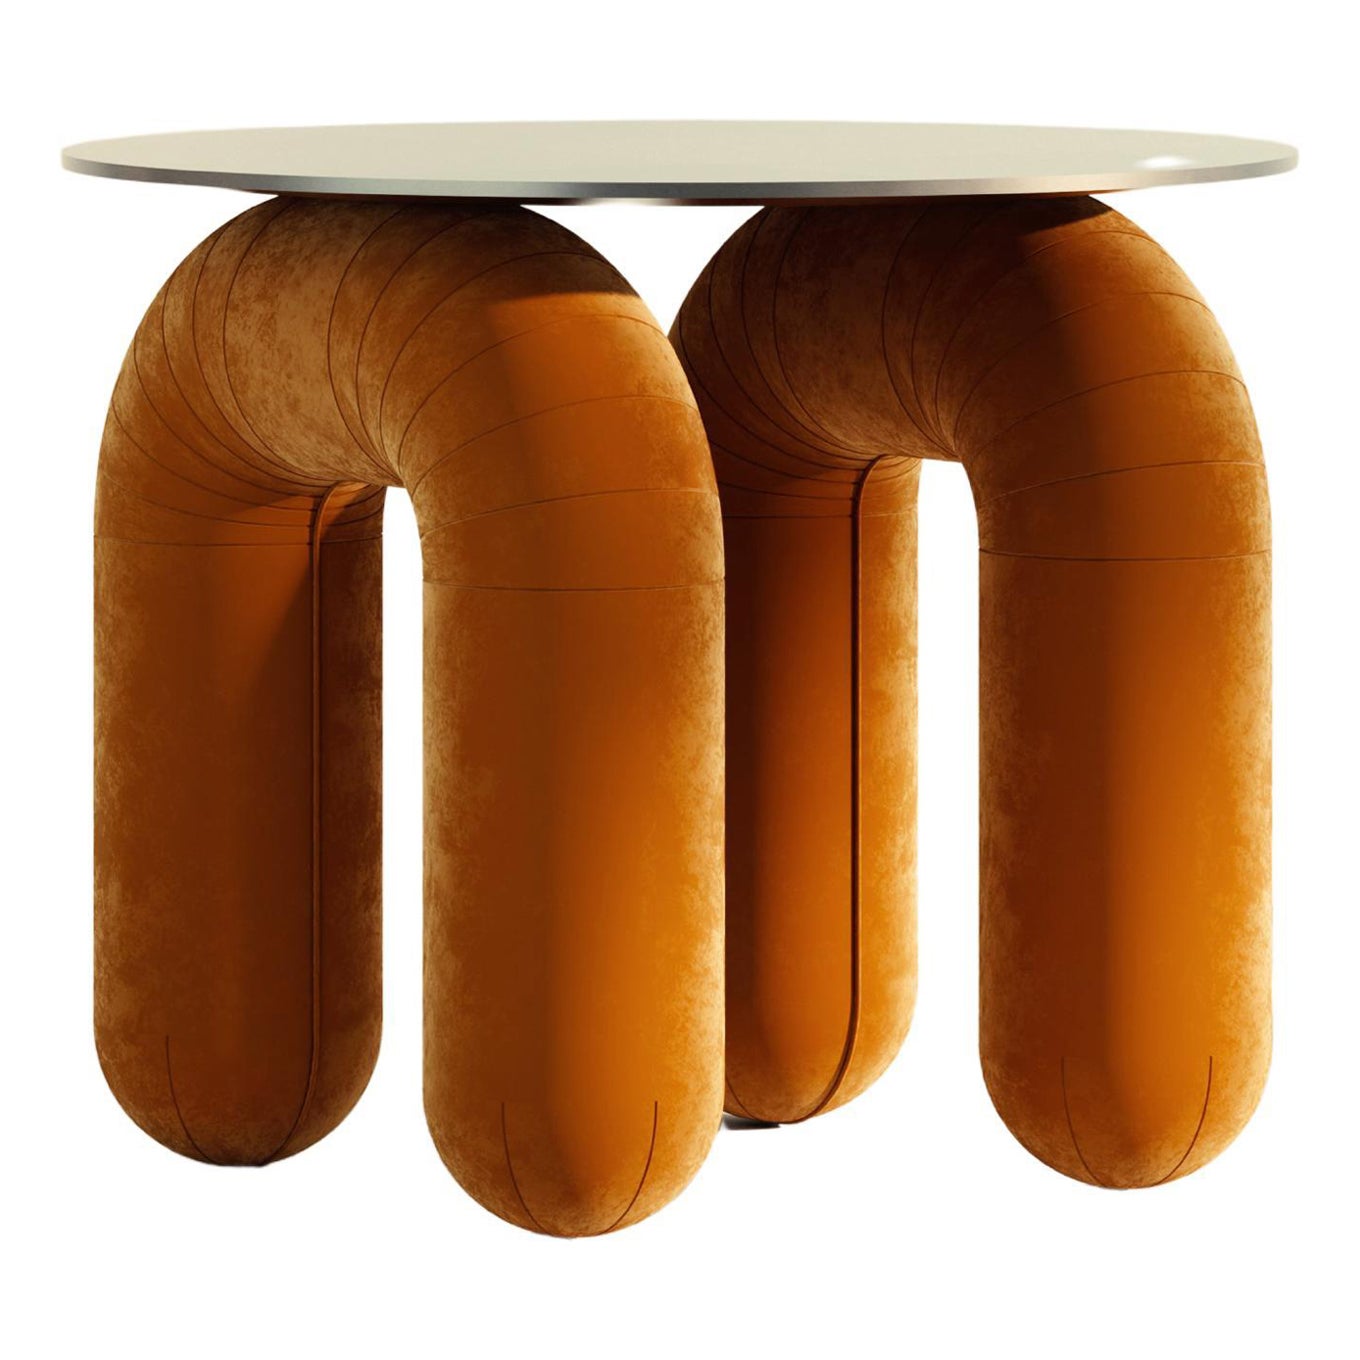 Luisita Table by Pietro Franceschini